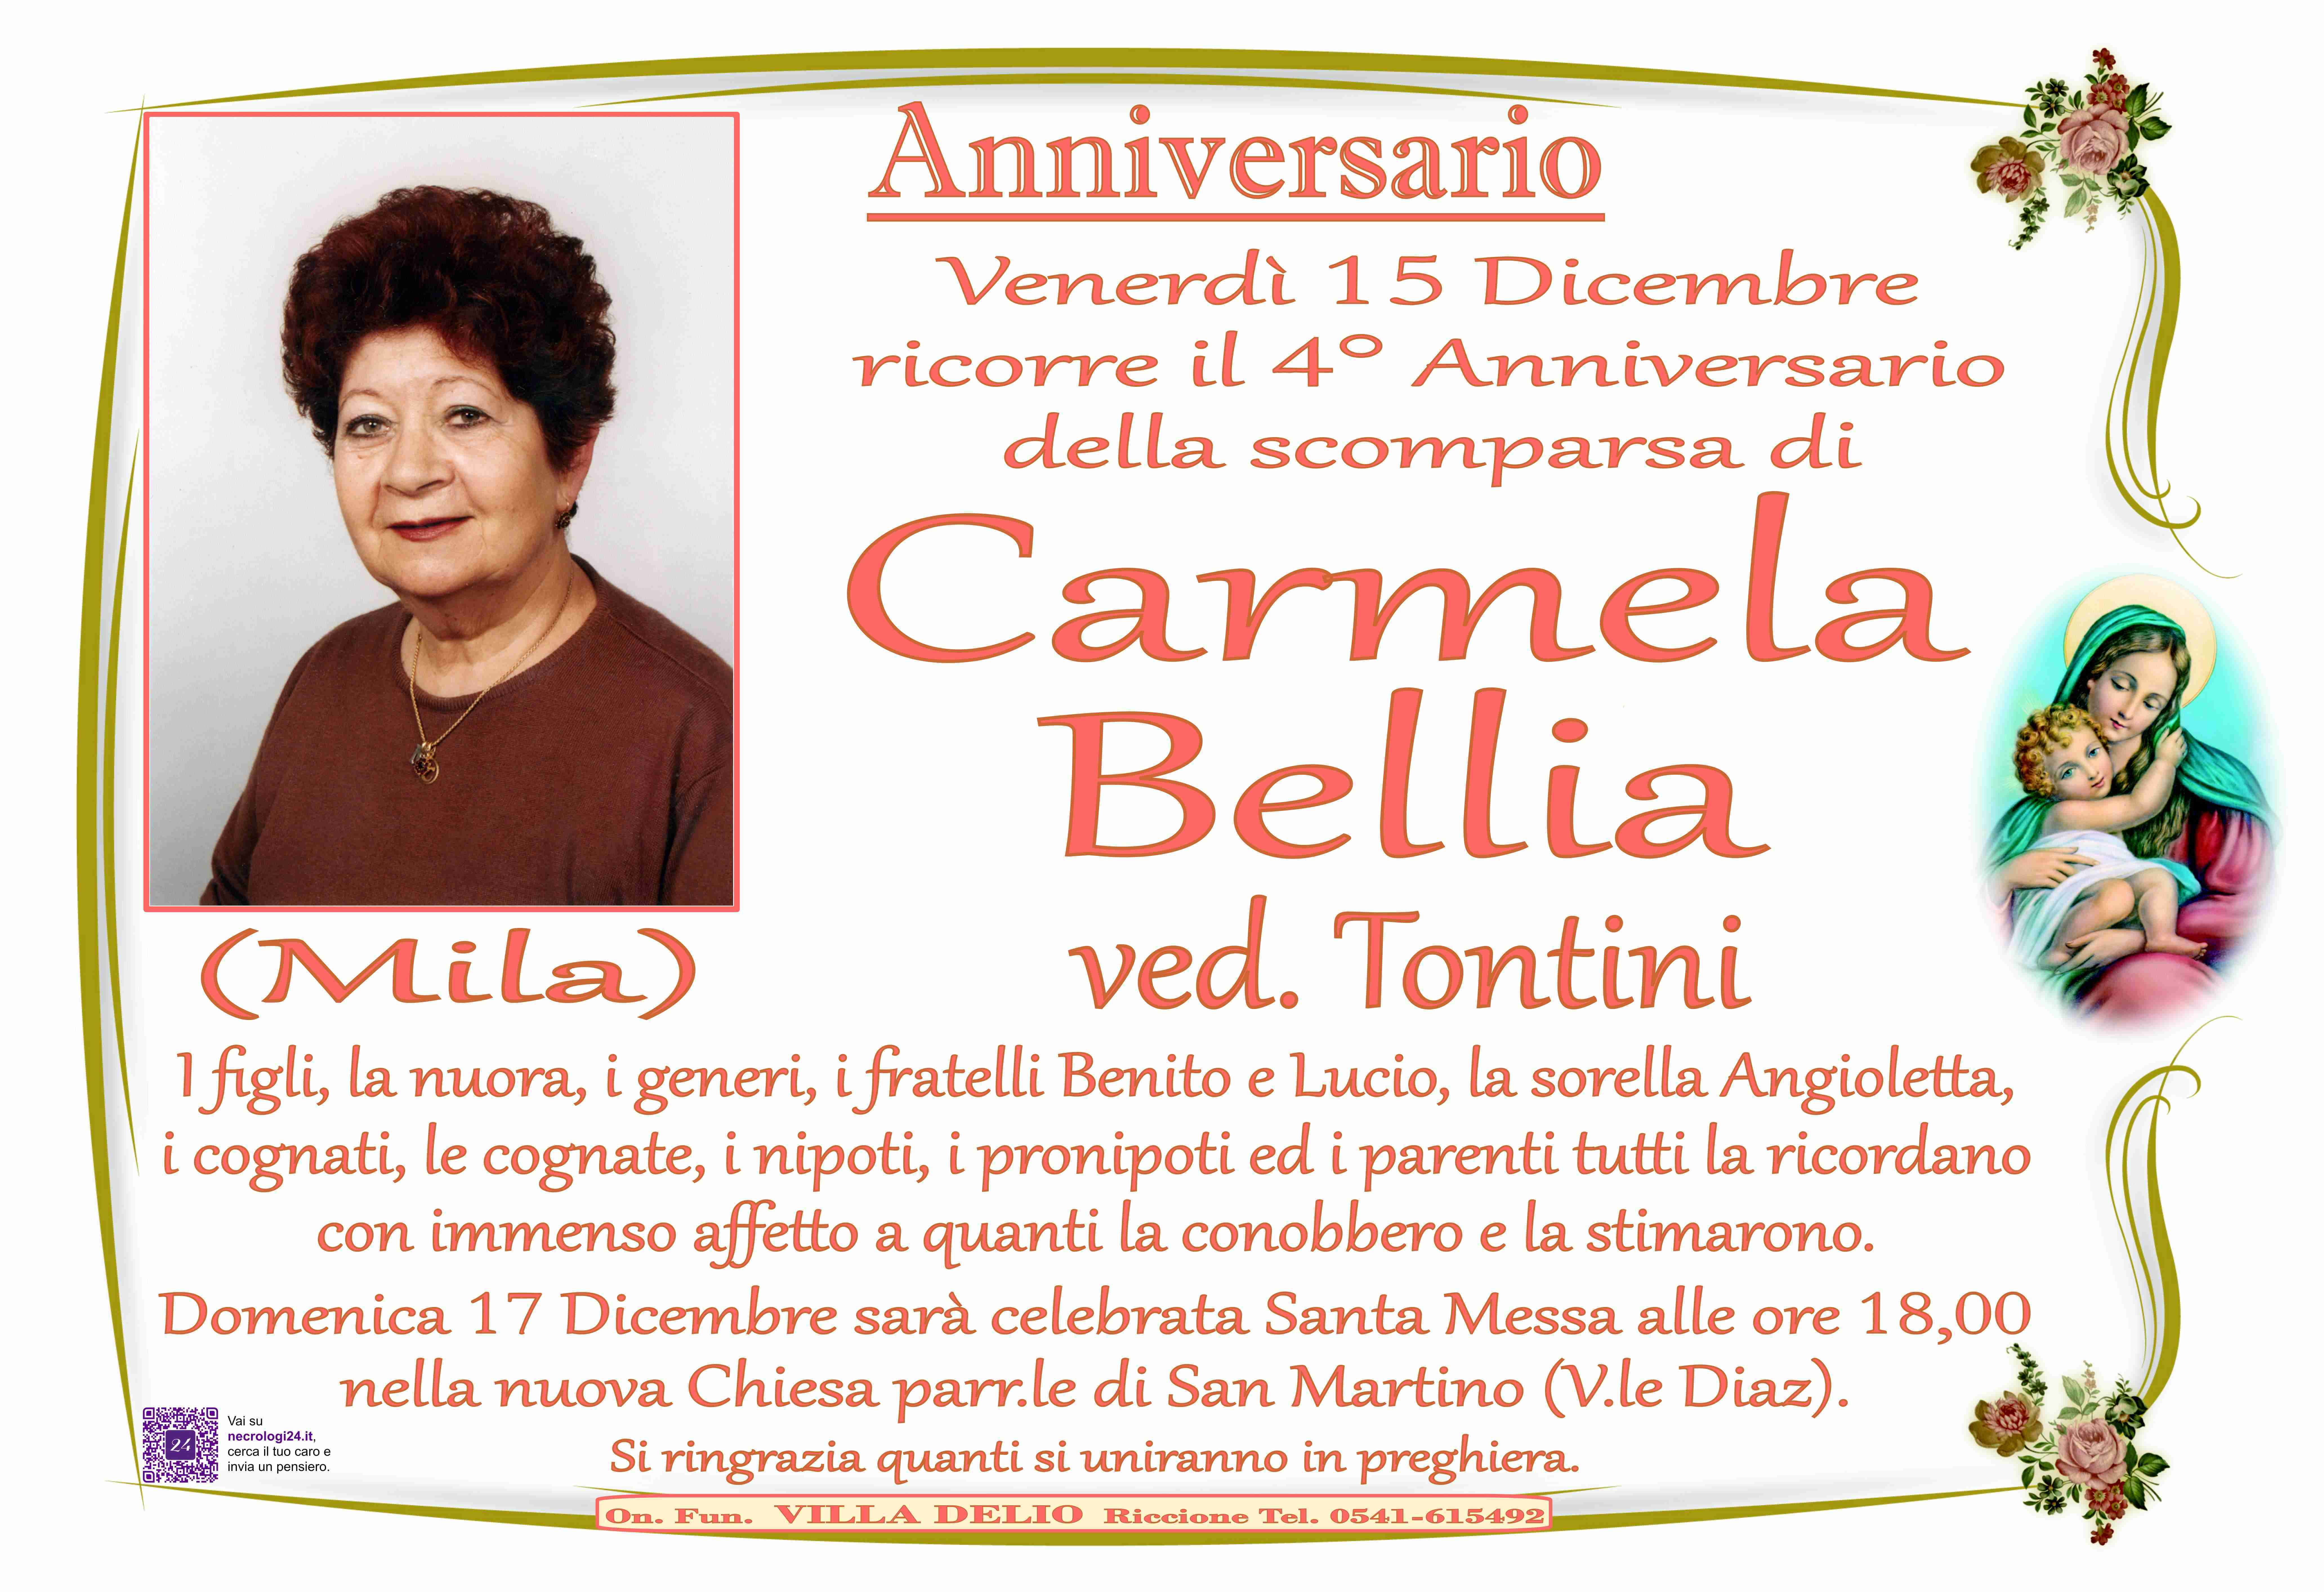 Carmela Bellia